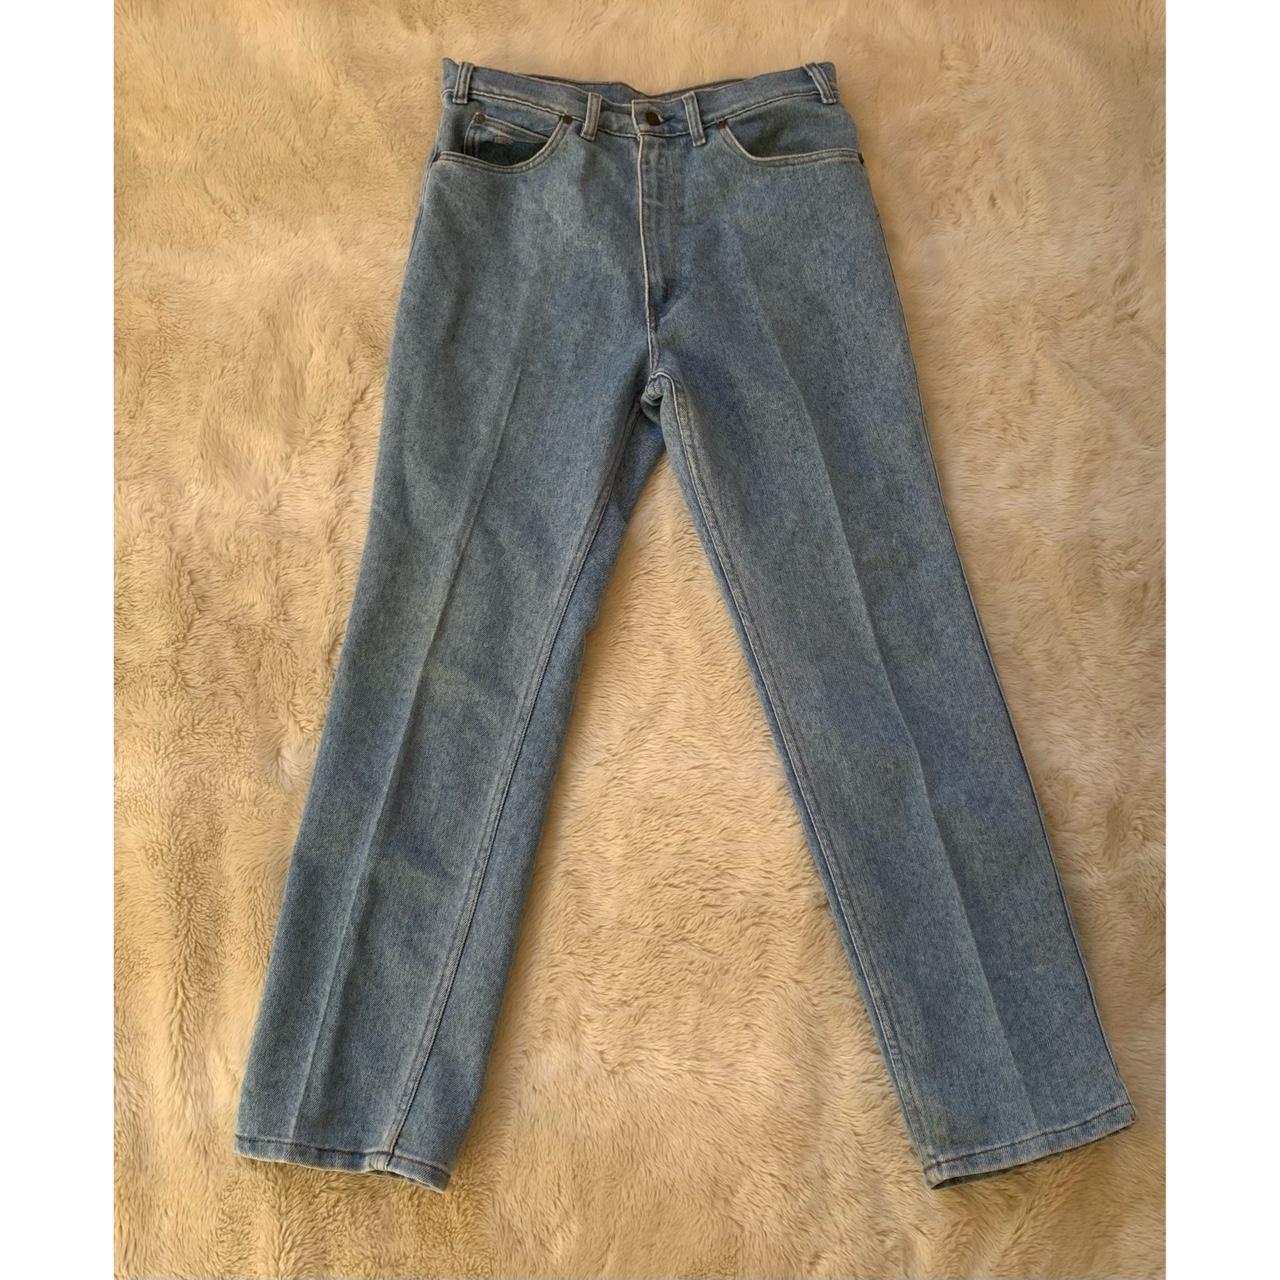 Vintage 90s Levi's Silver Tab Jeans in good gently... - Depop